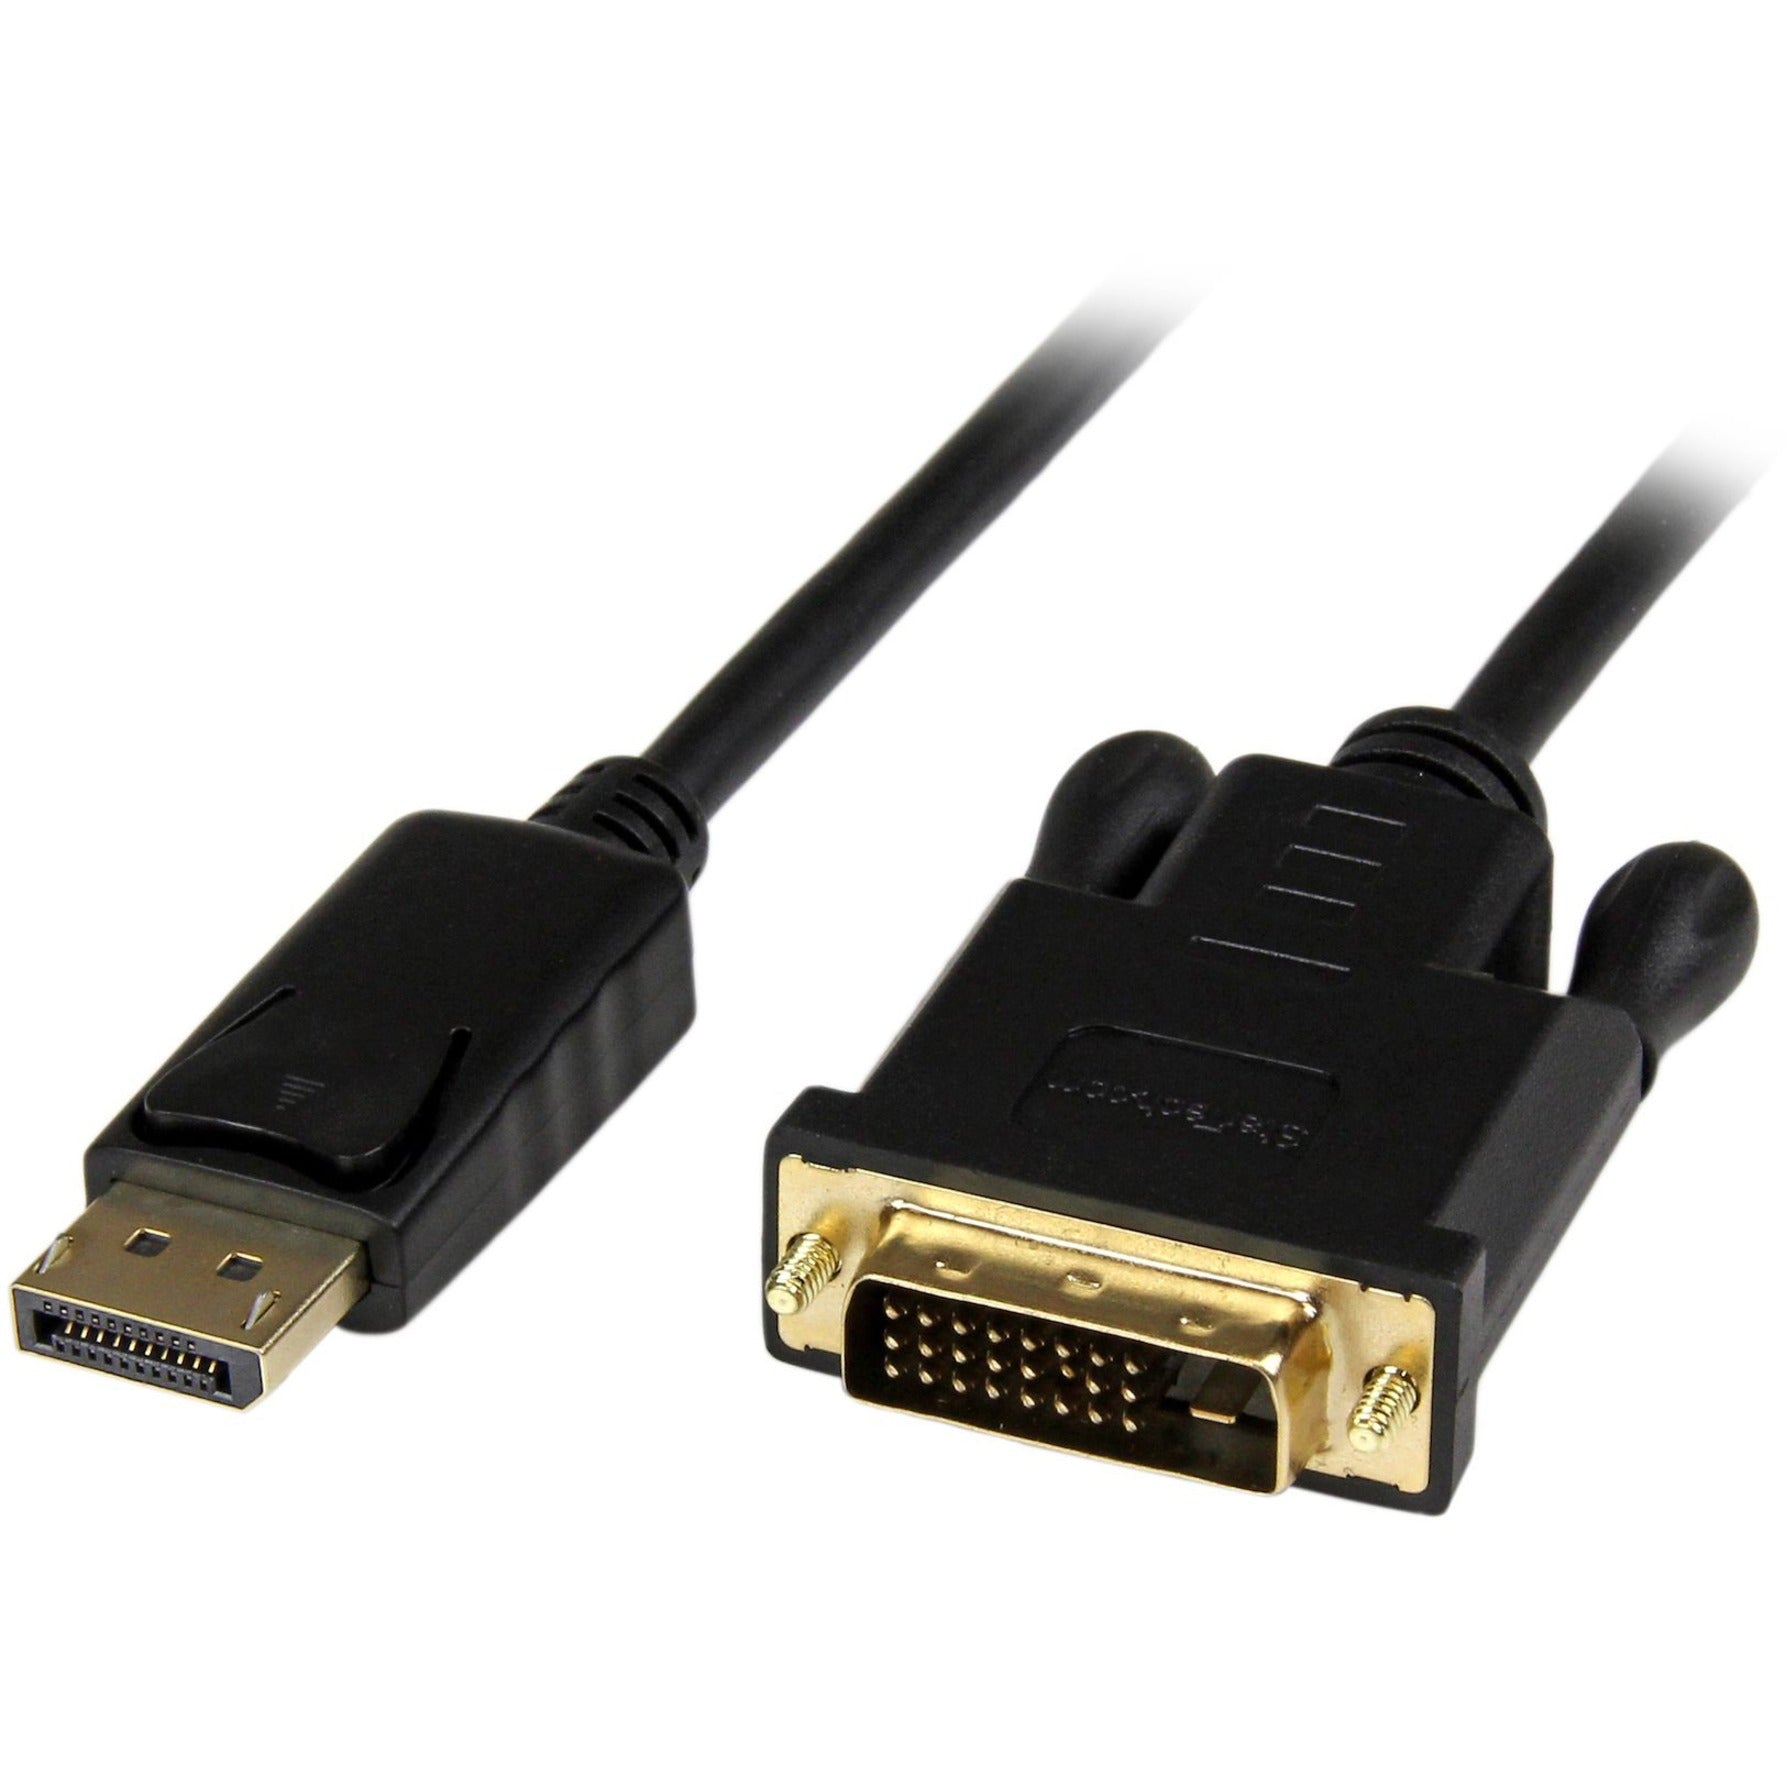 StarTech.com DP2DVIMM6BS Active DisplayPort to DVI Adapter, 6 ft Cable, 1920 x 1200 Resolution